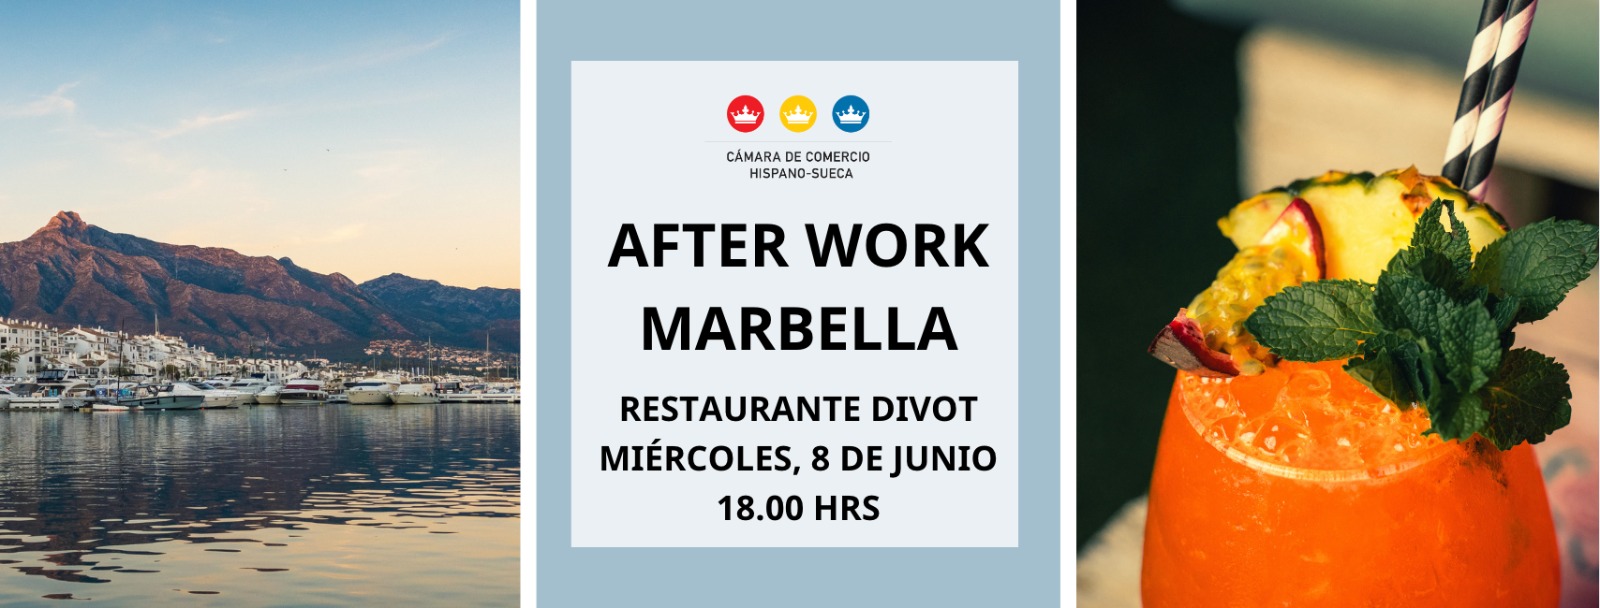 After Work en Marbella